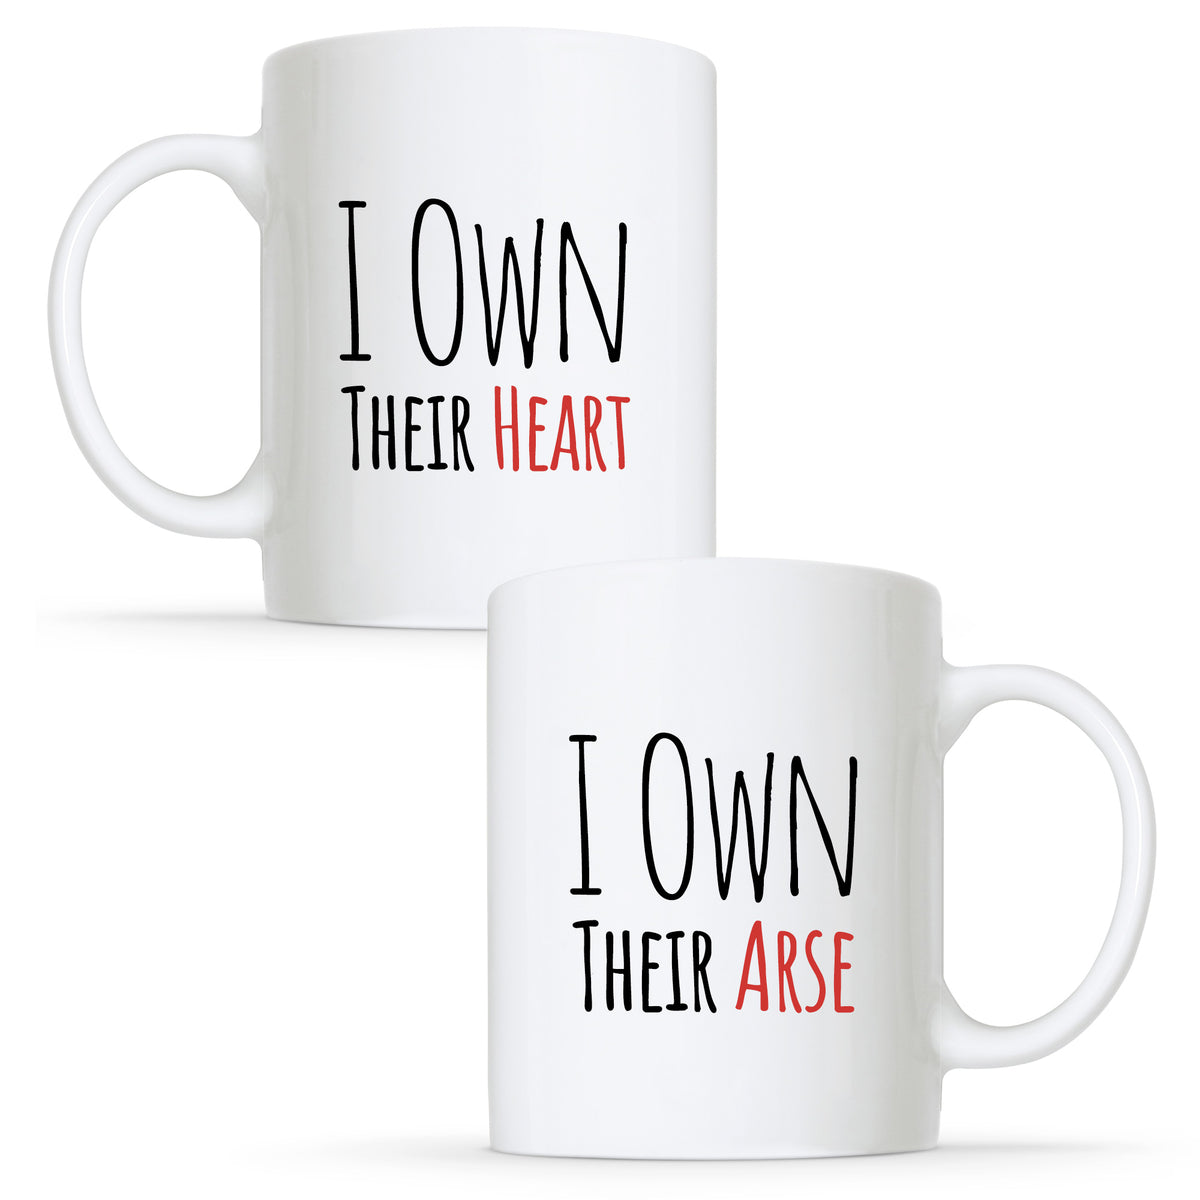 I Own Their Heart &amp; I Own Their Arse - Non-Binary Couple Mug Set | Gift